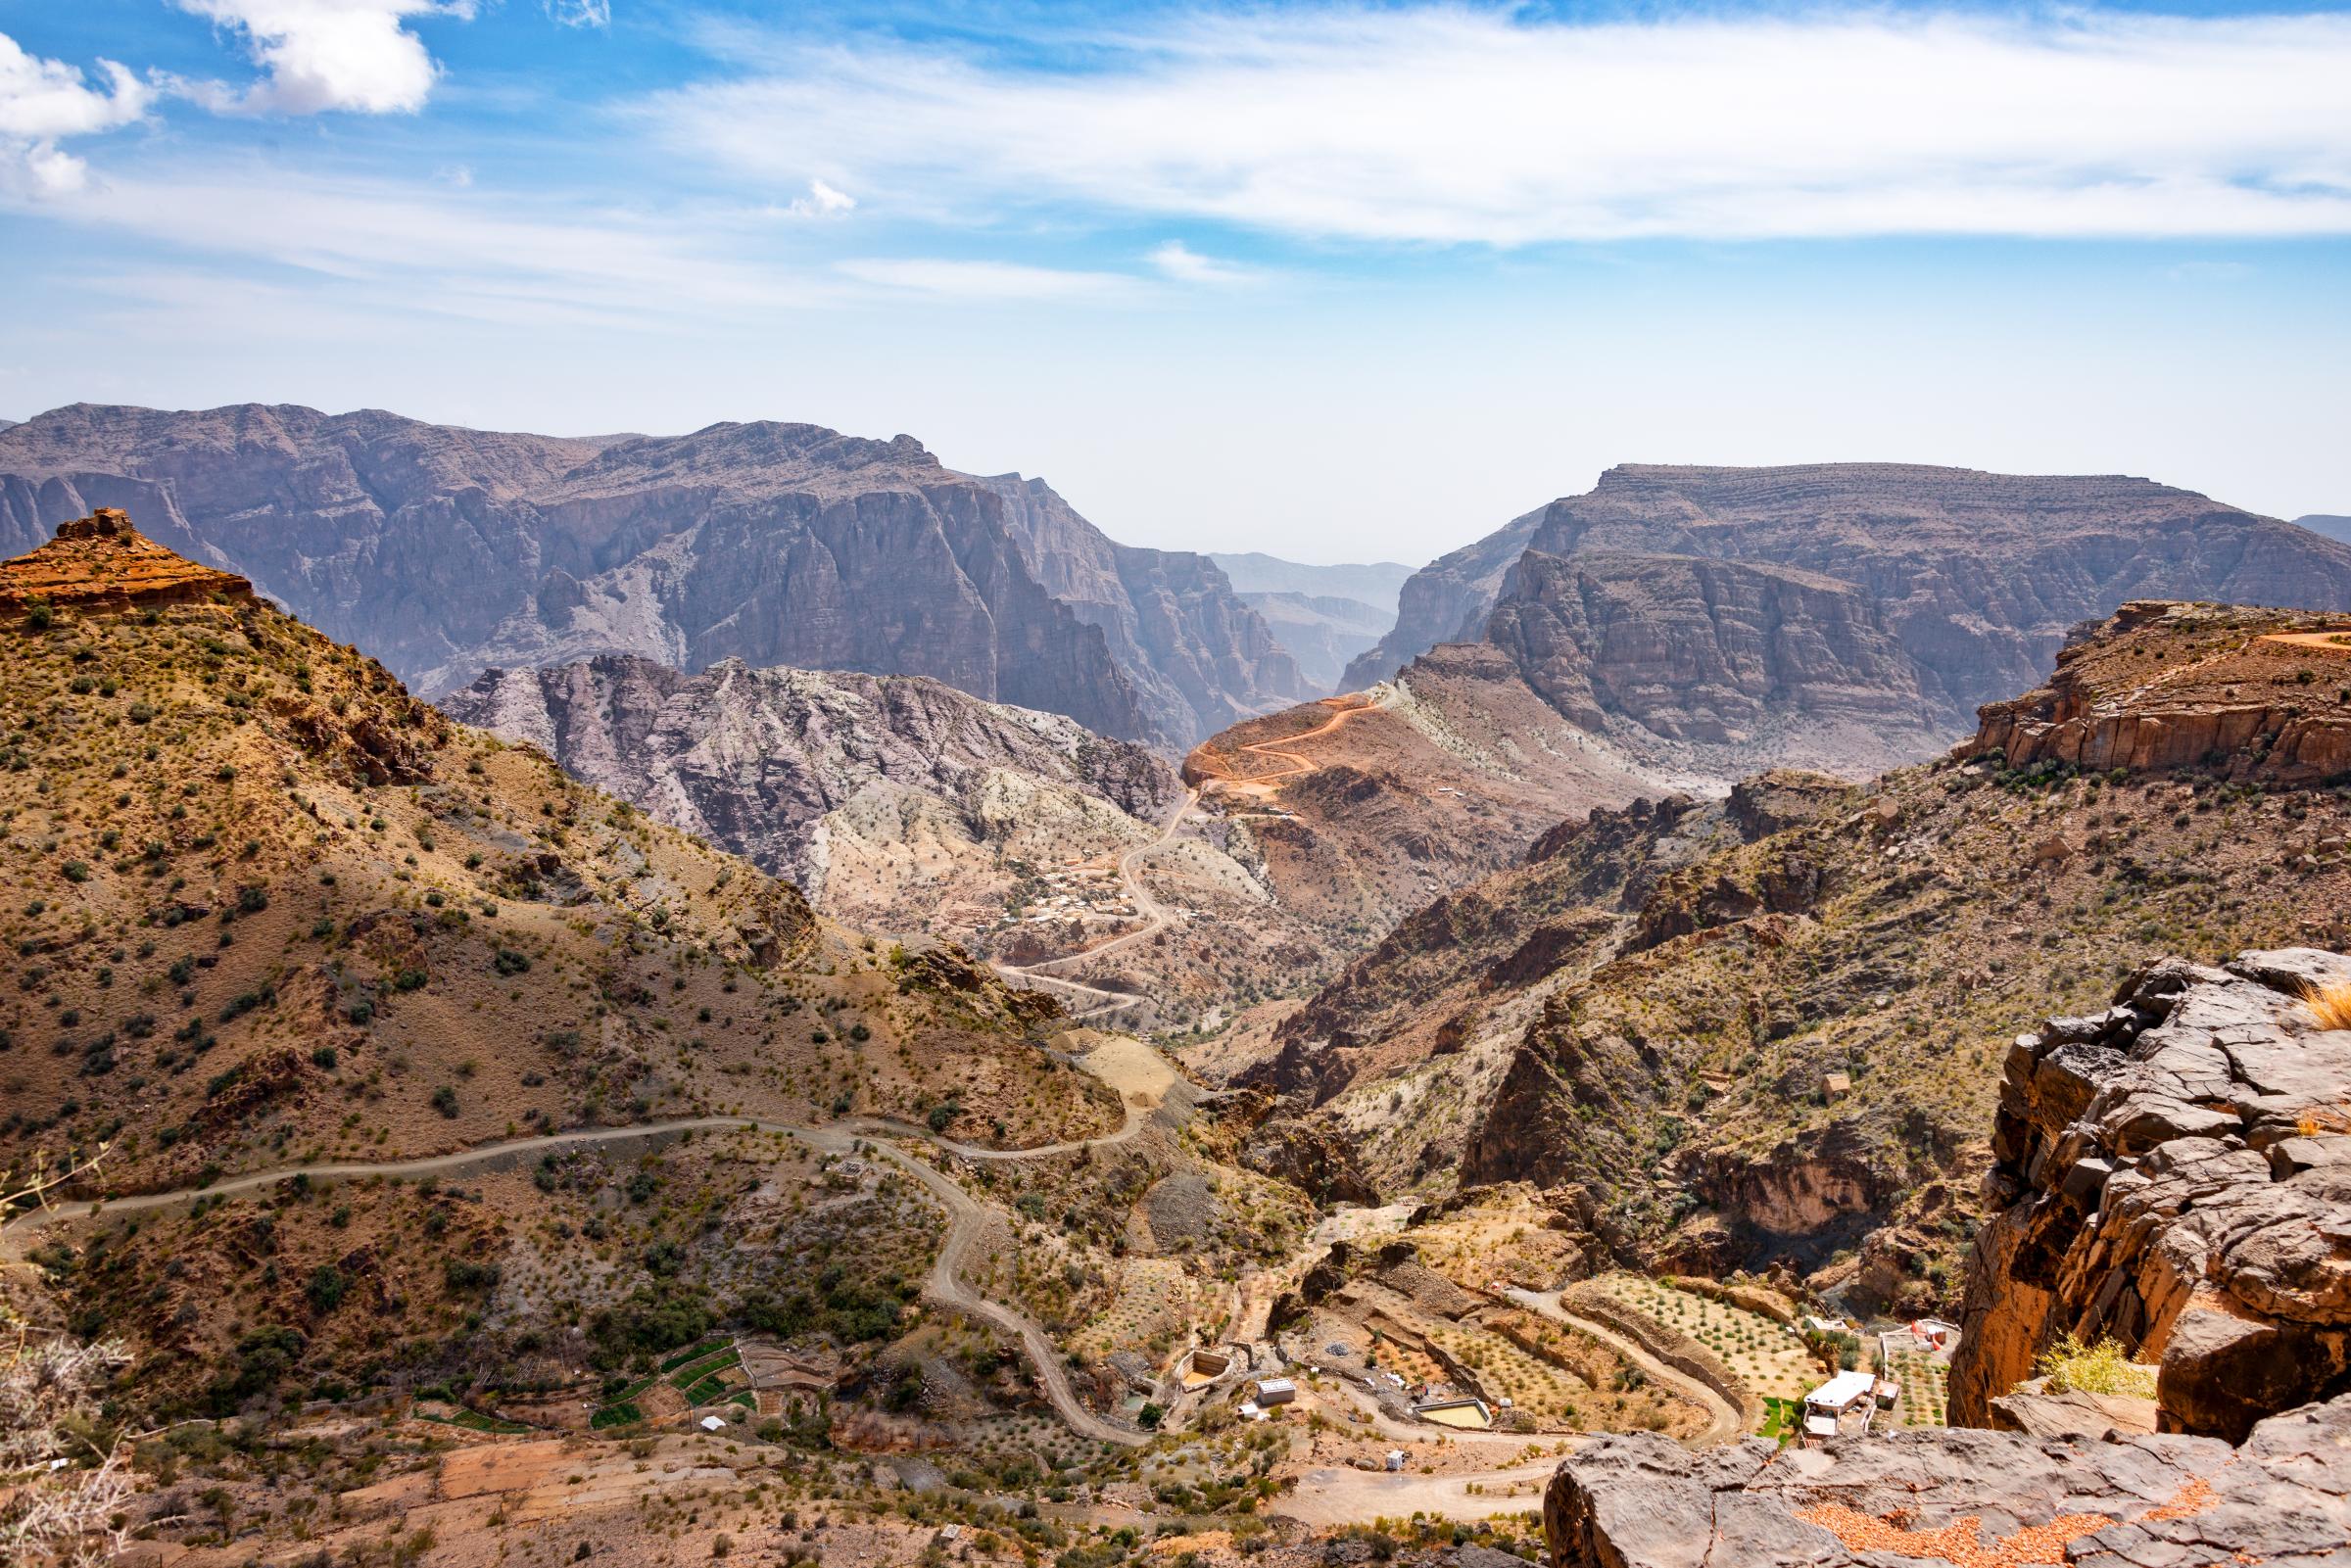 Jebel Akhdar Mountain range in Oman